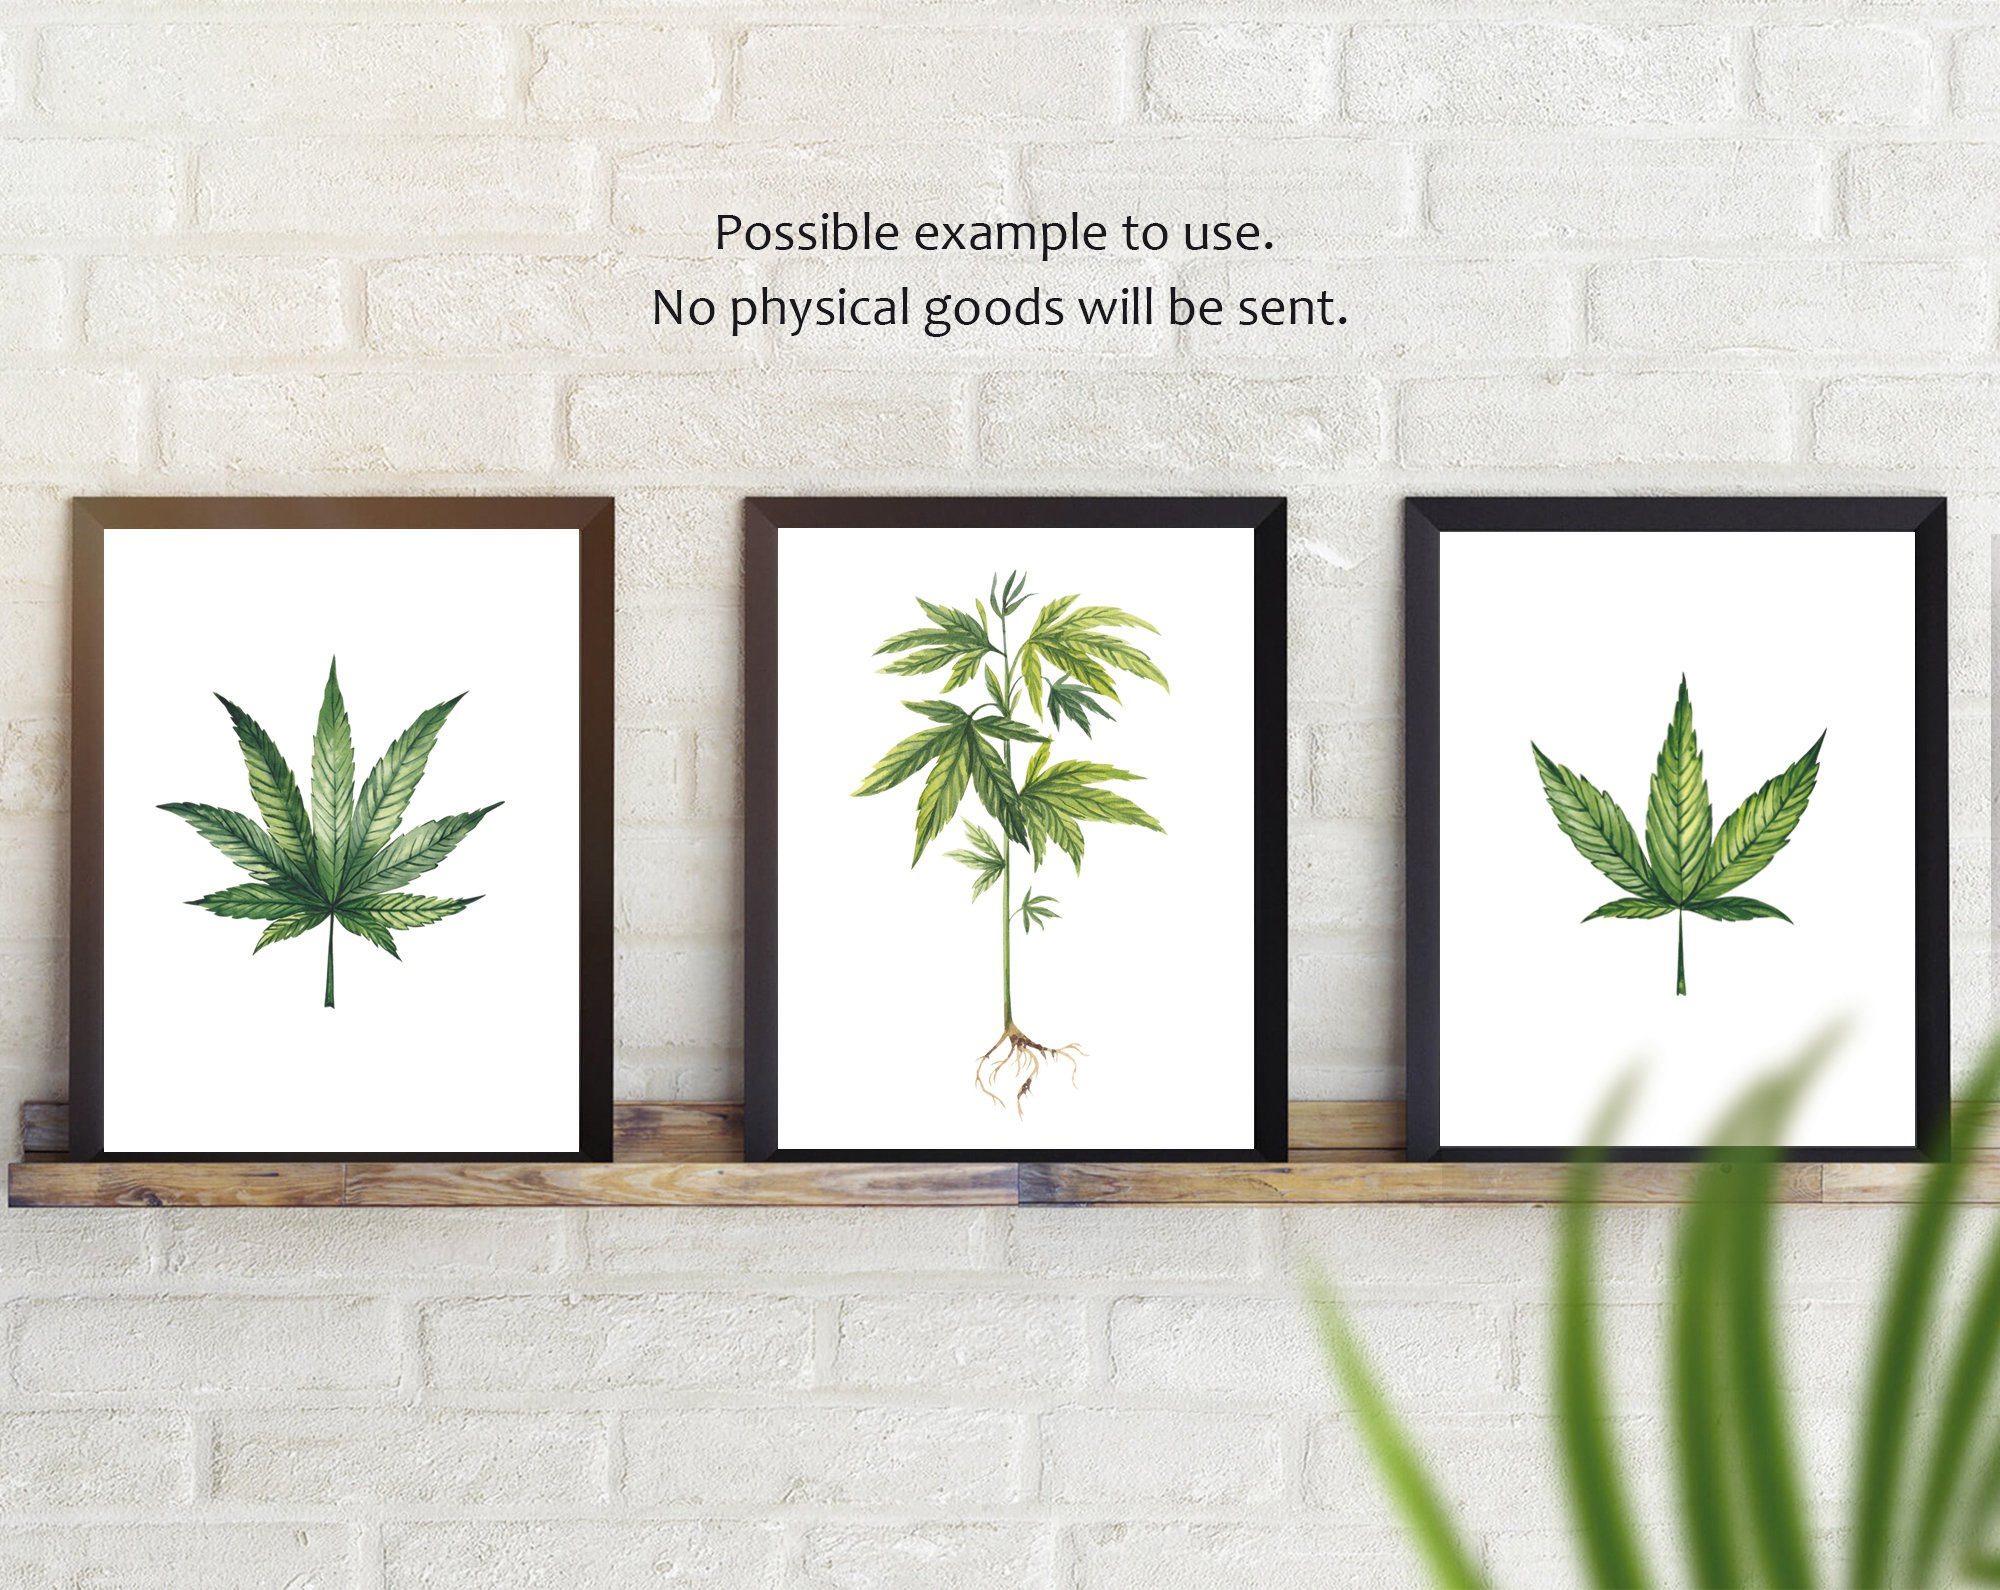 Cannabis plants.